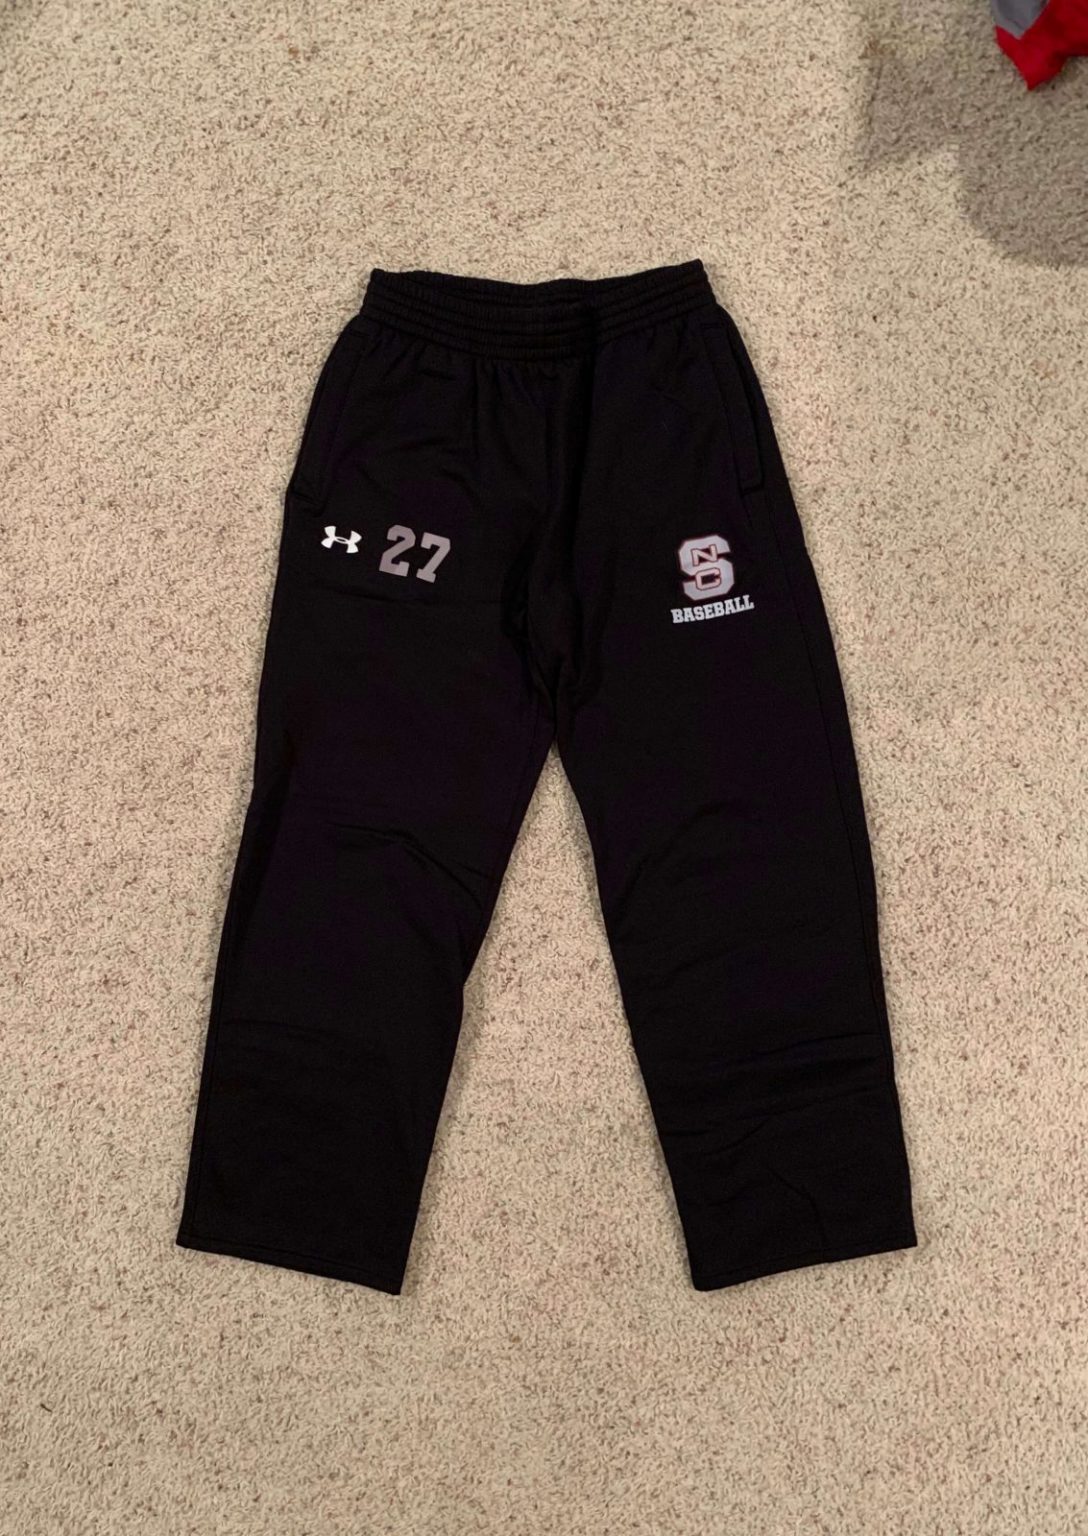 NC State Baseball Sweatpants : NARP Clothing